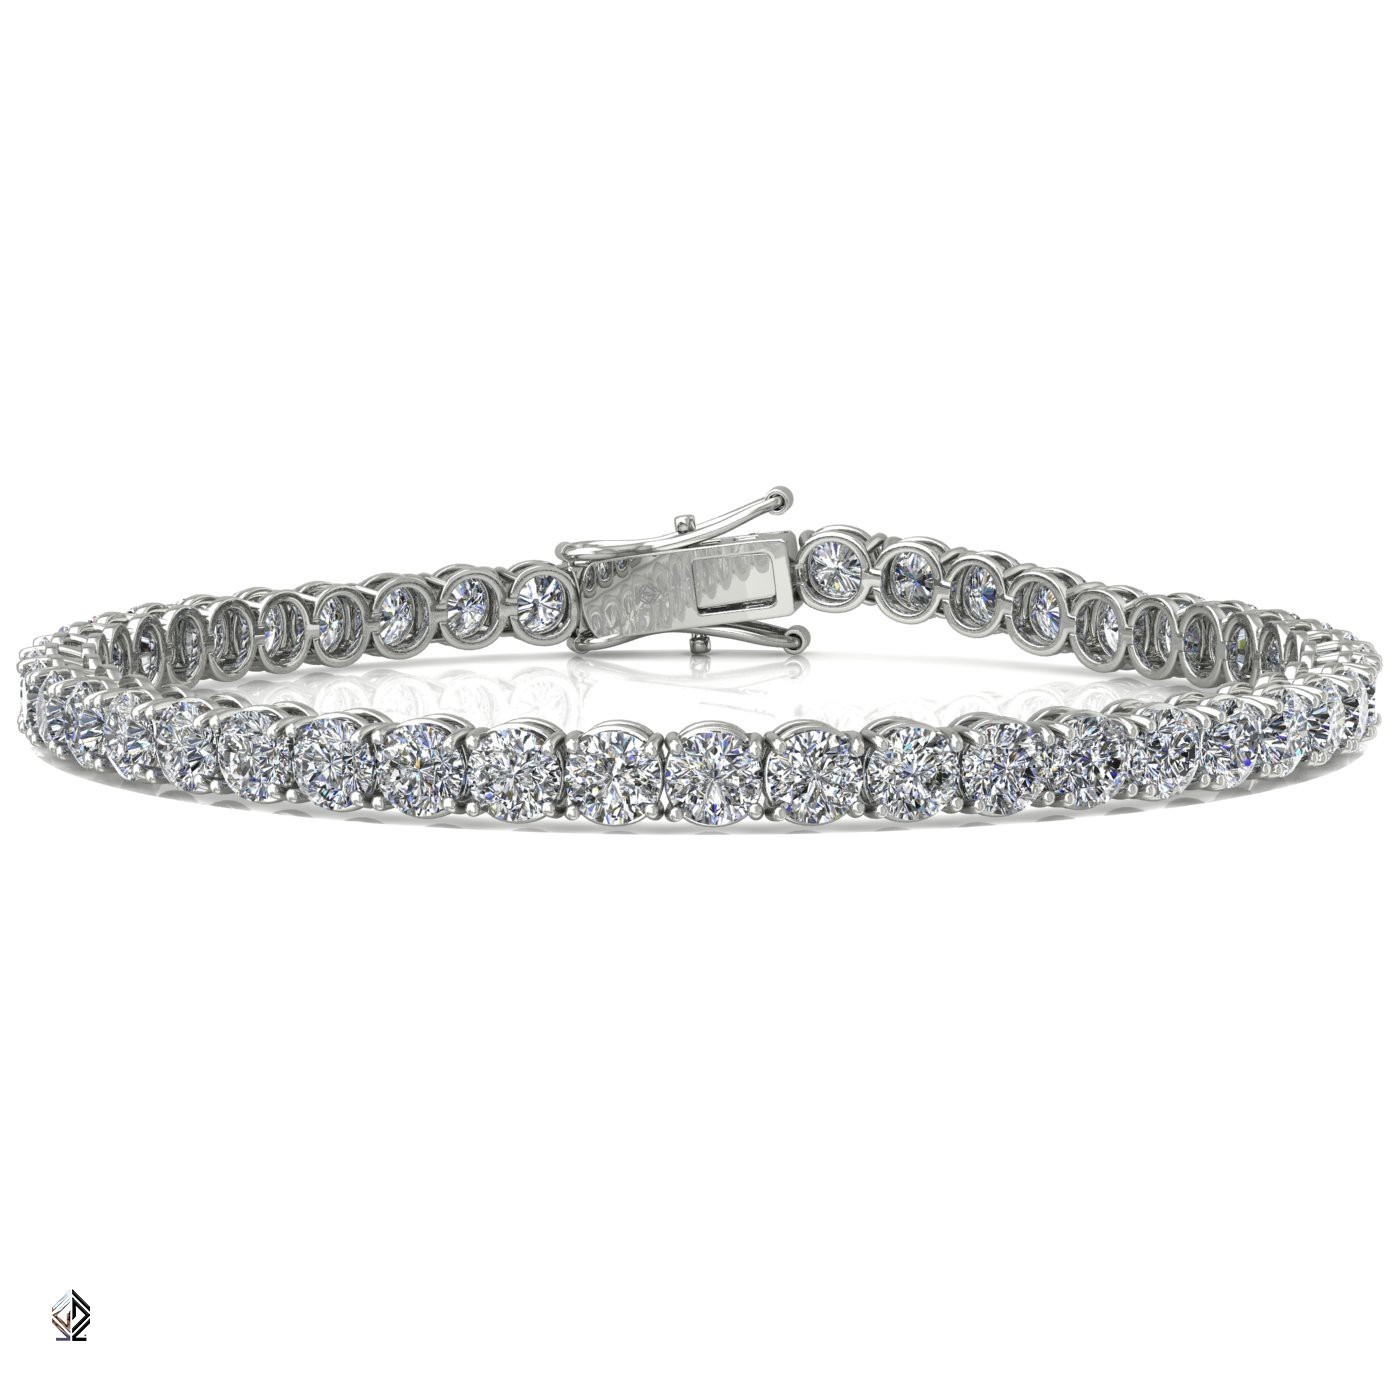 18k white gold 3.3mm 4 prong round shape diamond tennis bracelet in round setting